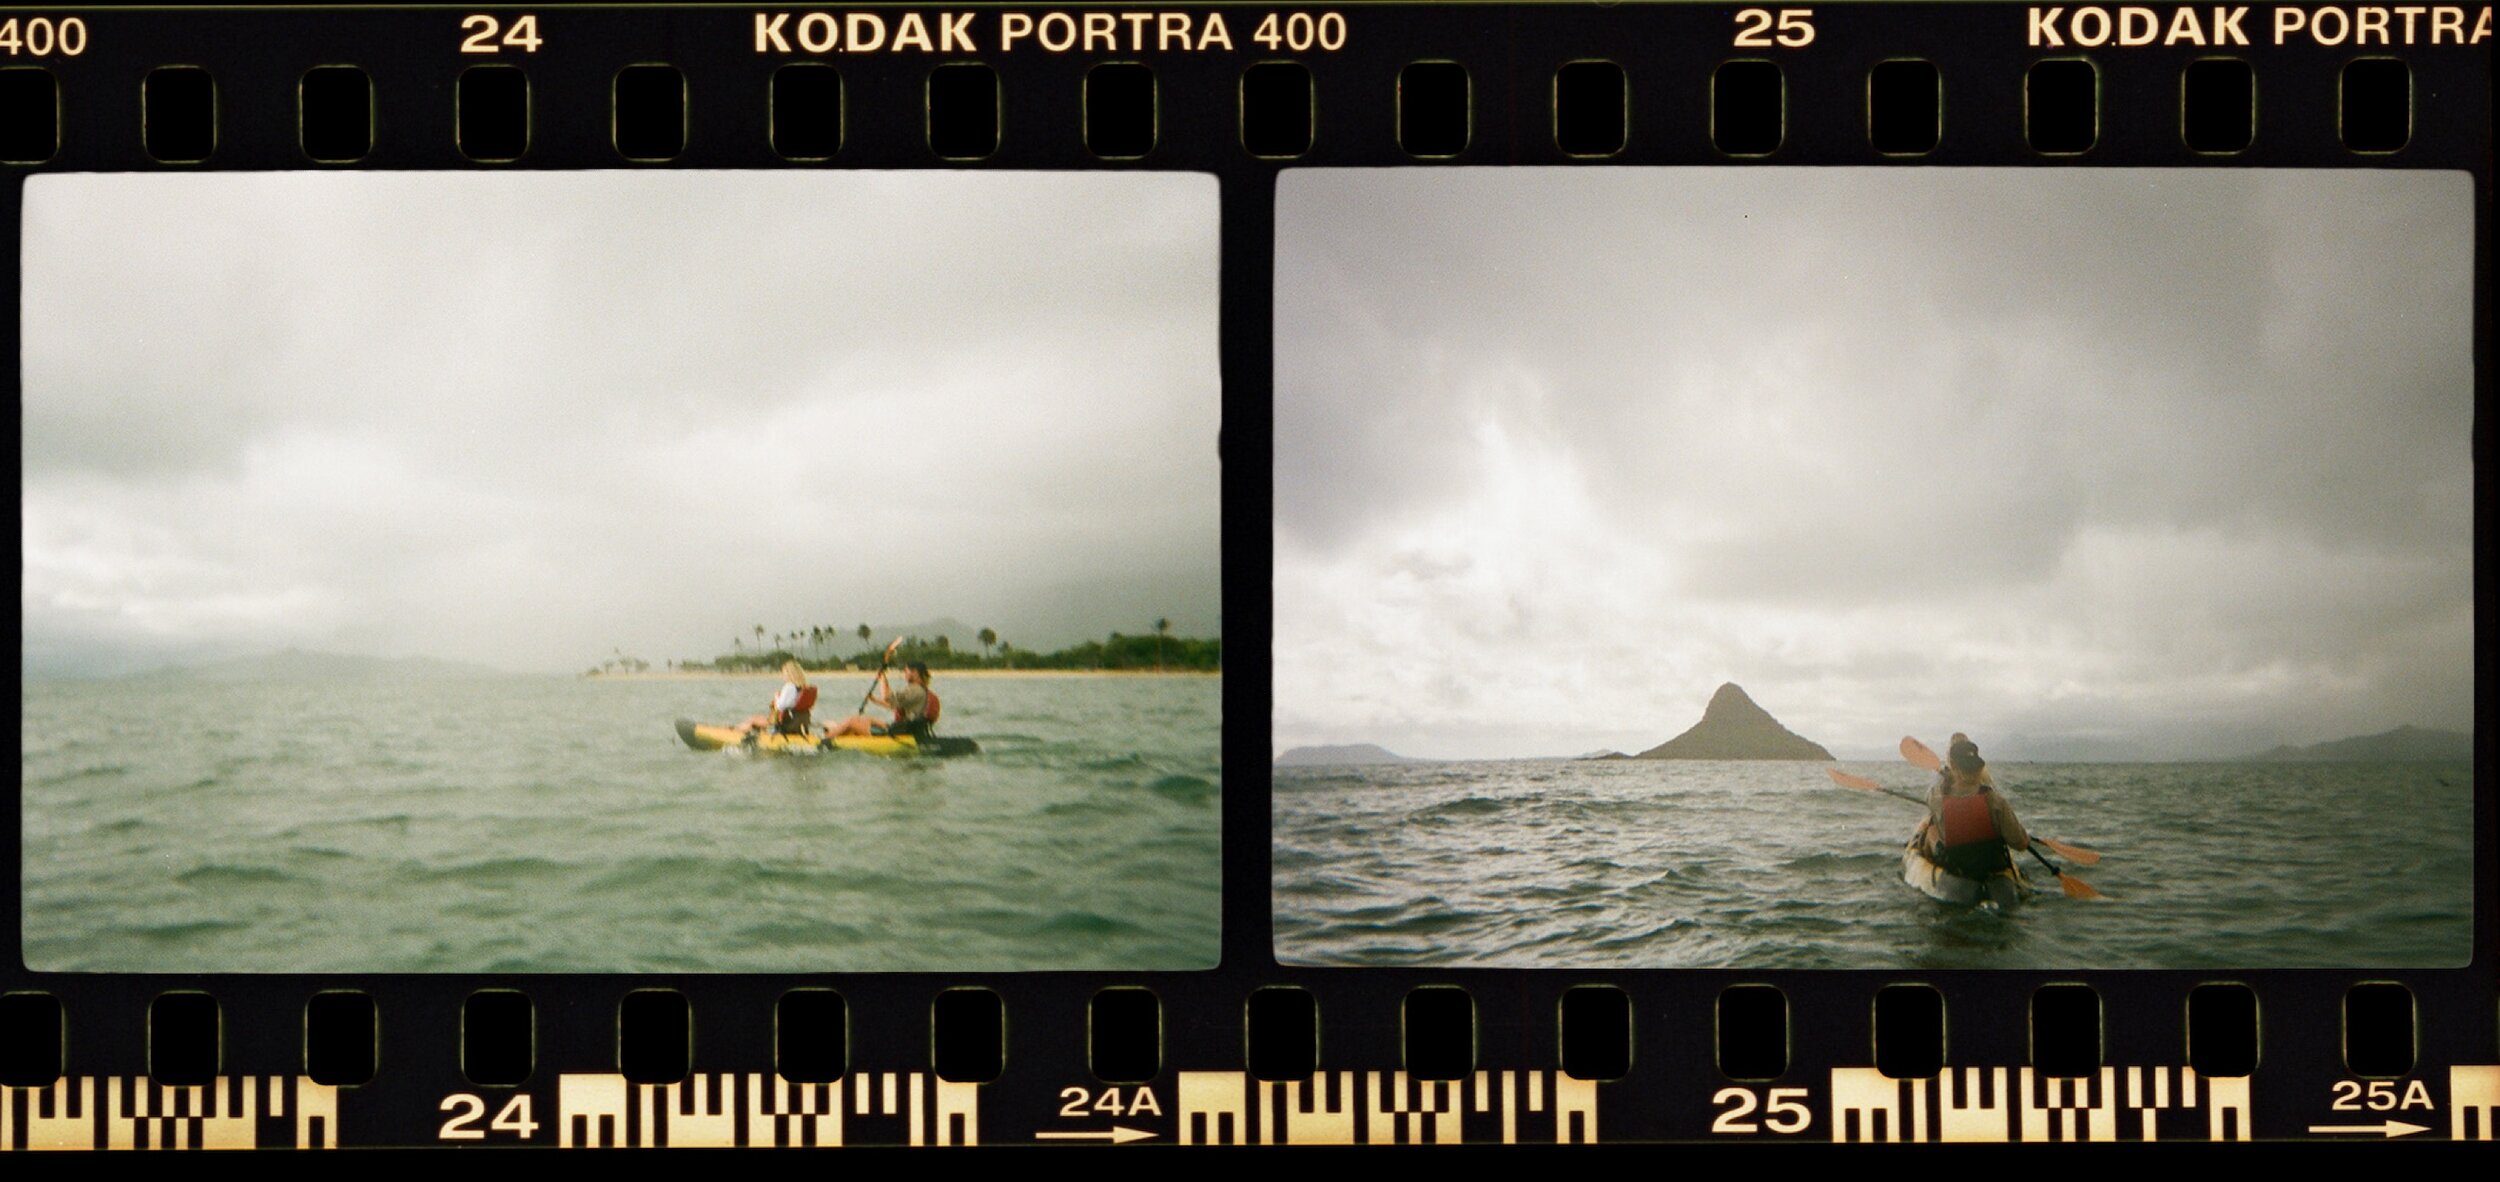 02_Kodak 400 4x  copy.jpg